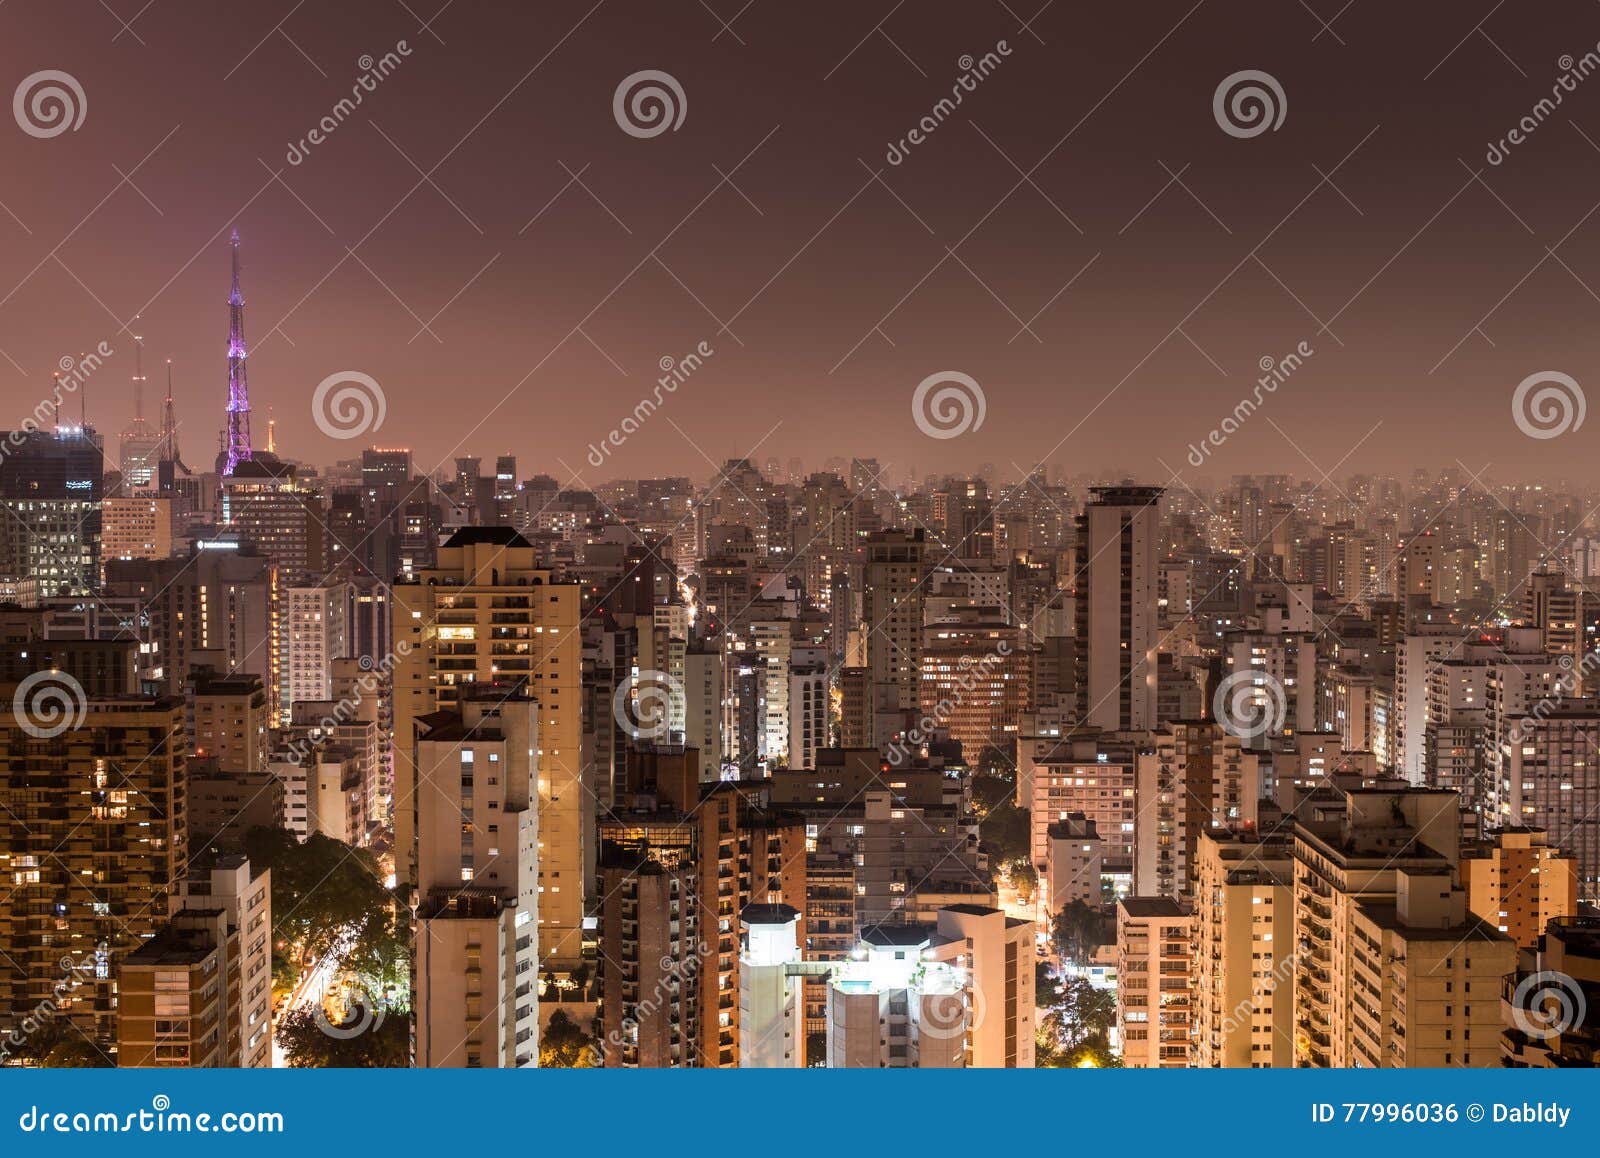 sao paulo city at night